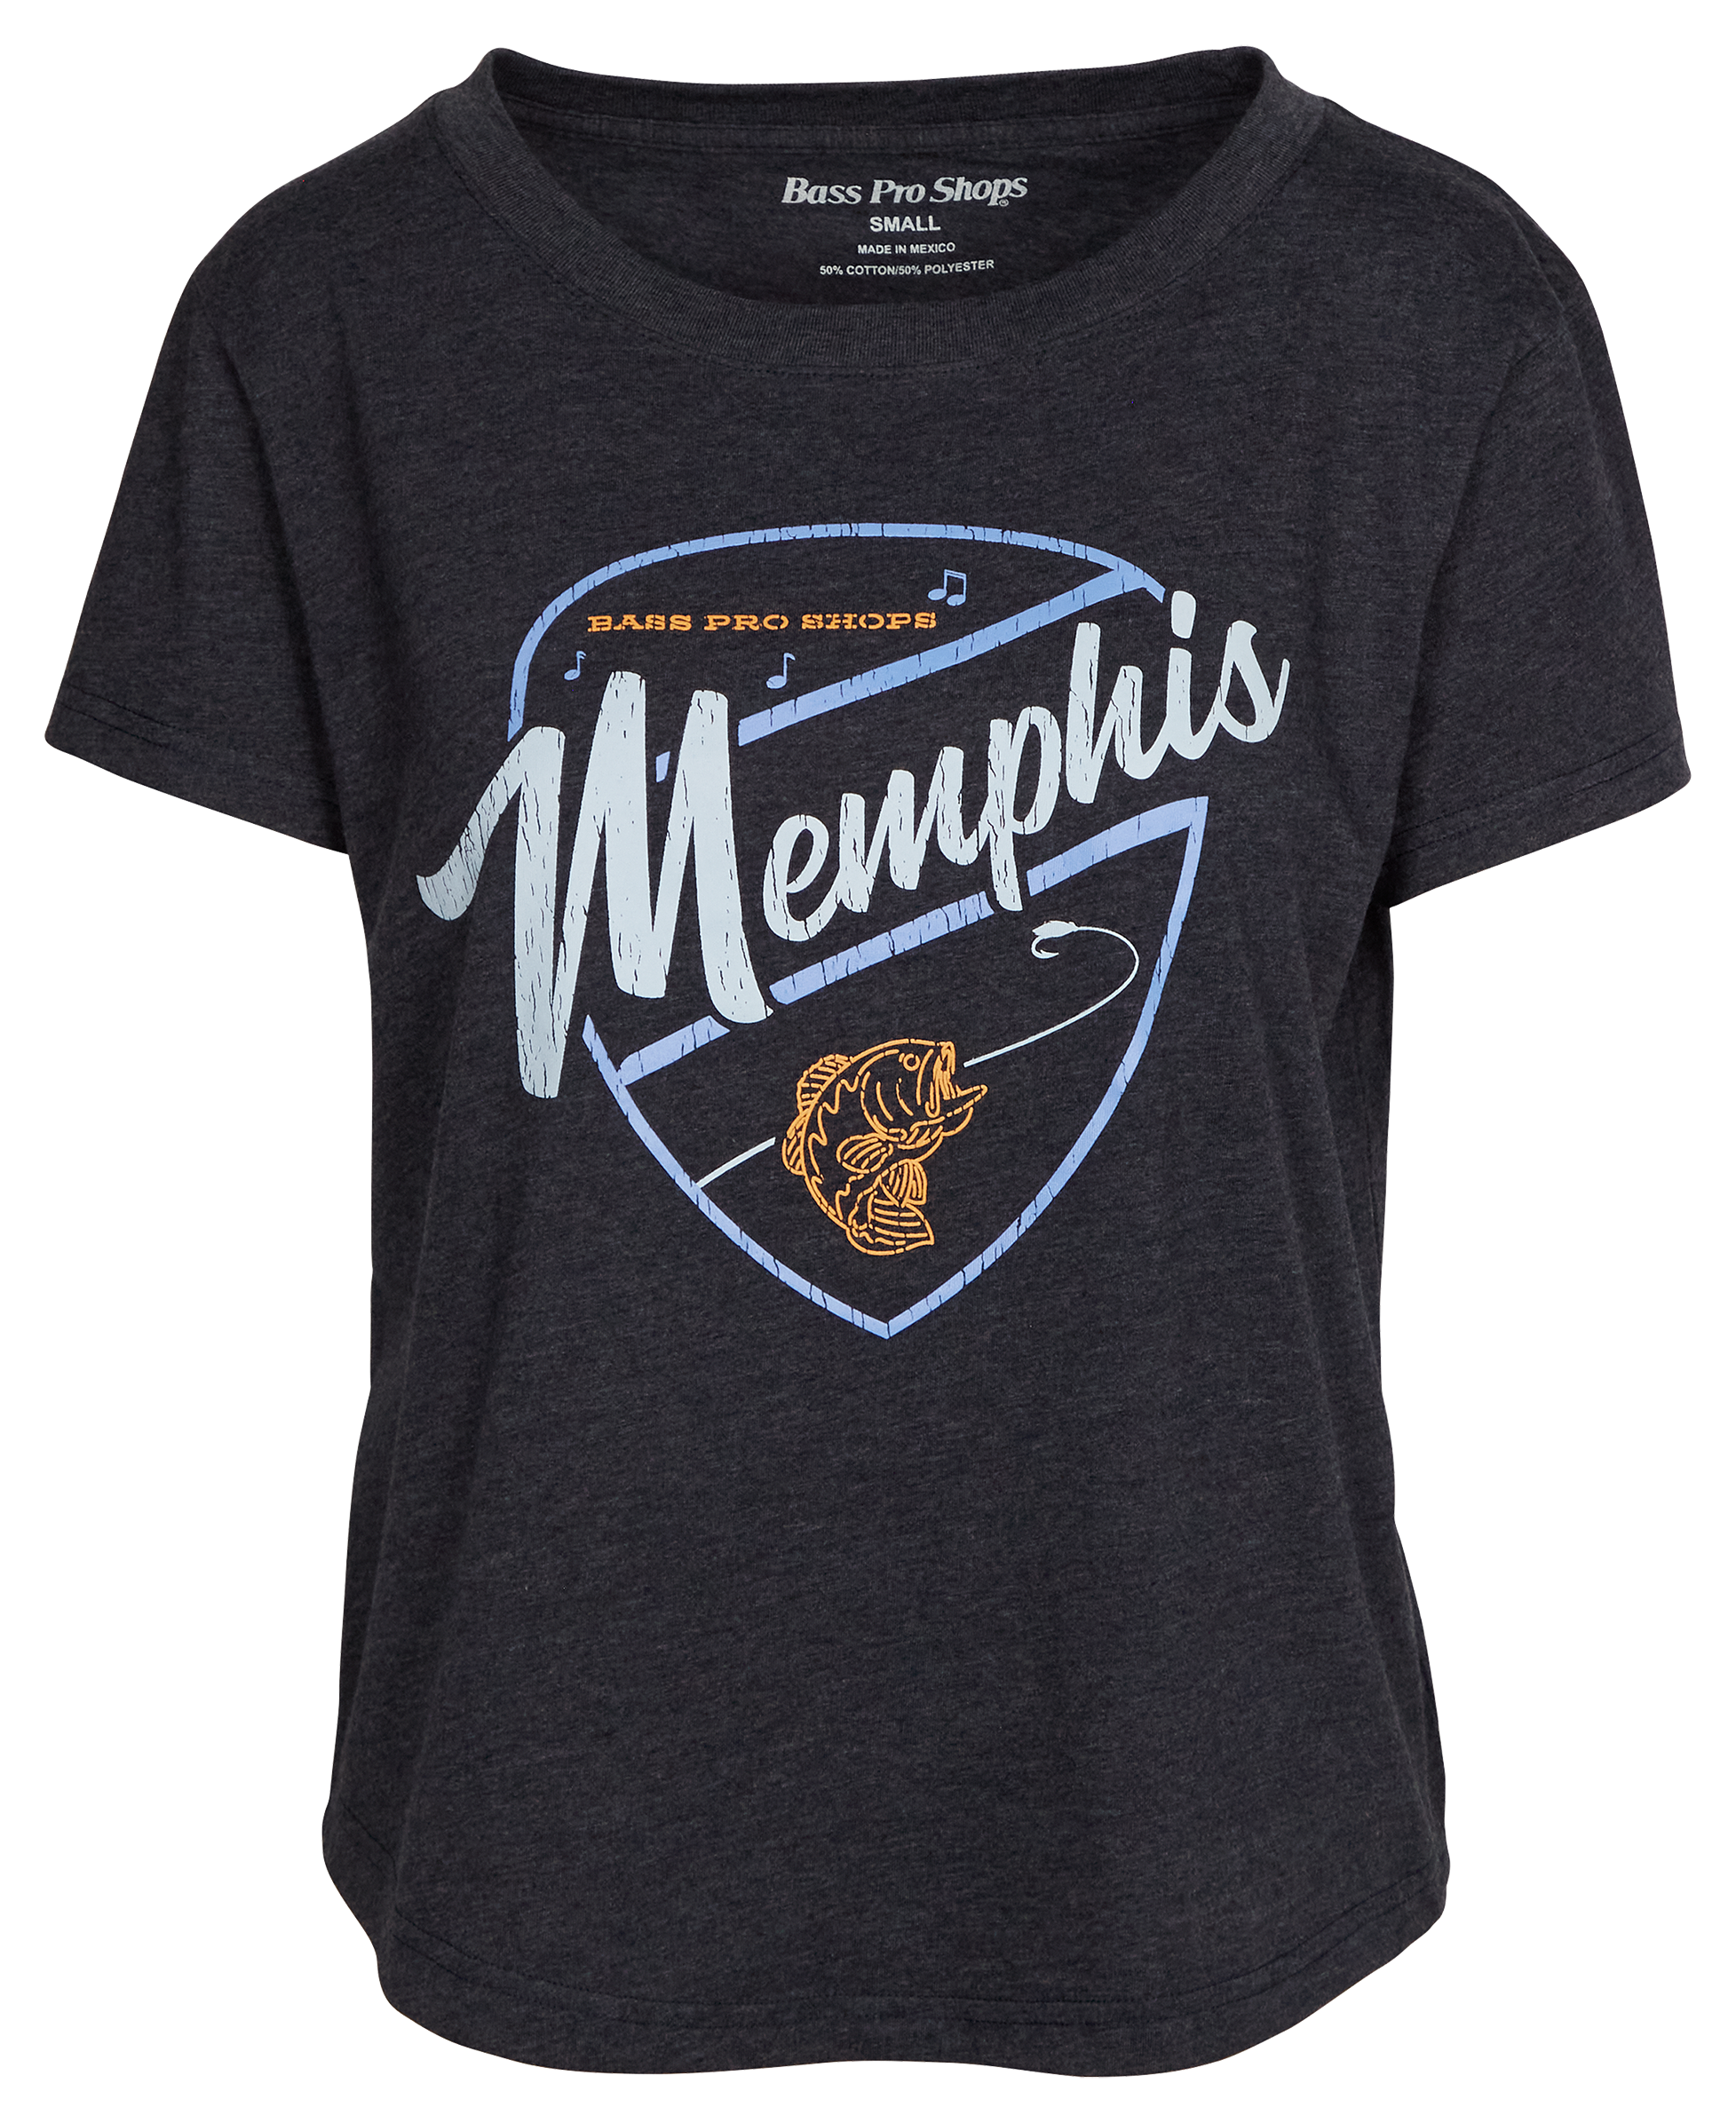 Bass Pro Shops Guitar Pick Memphis Short-Sleeve T-Shirt for Ladies